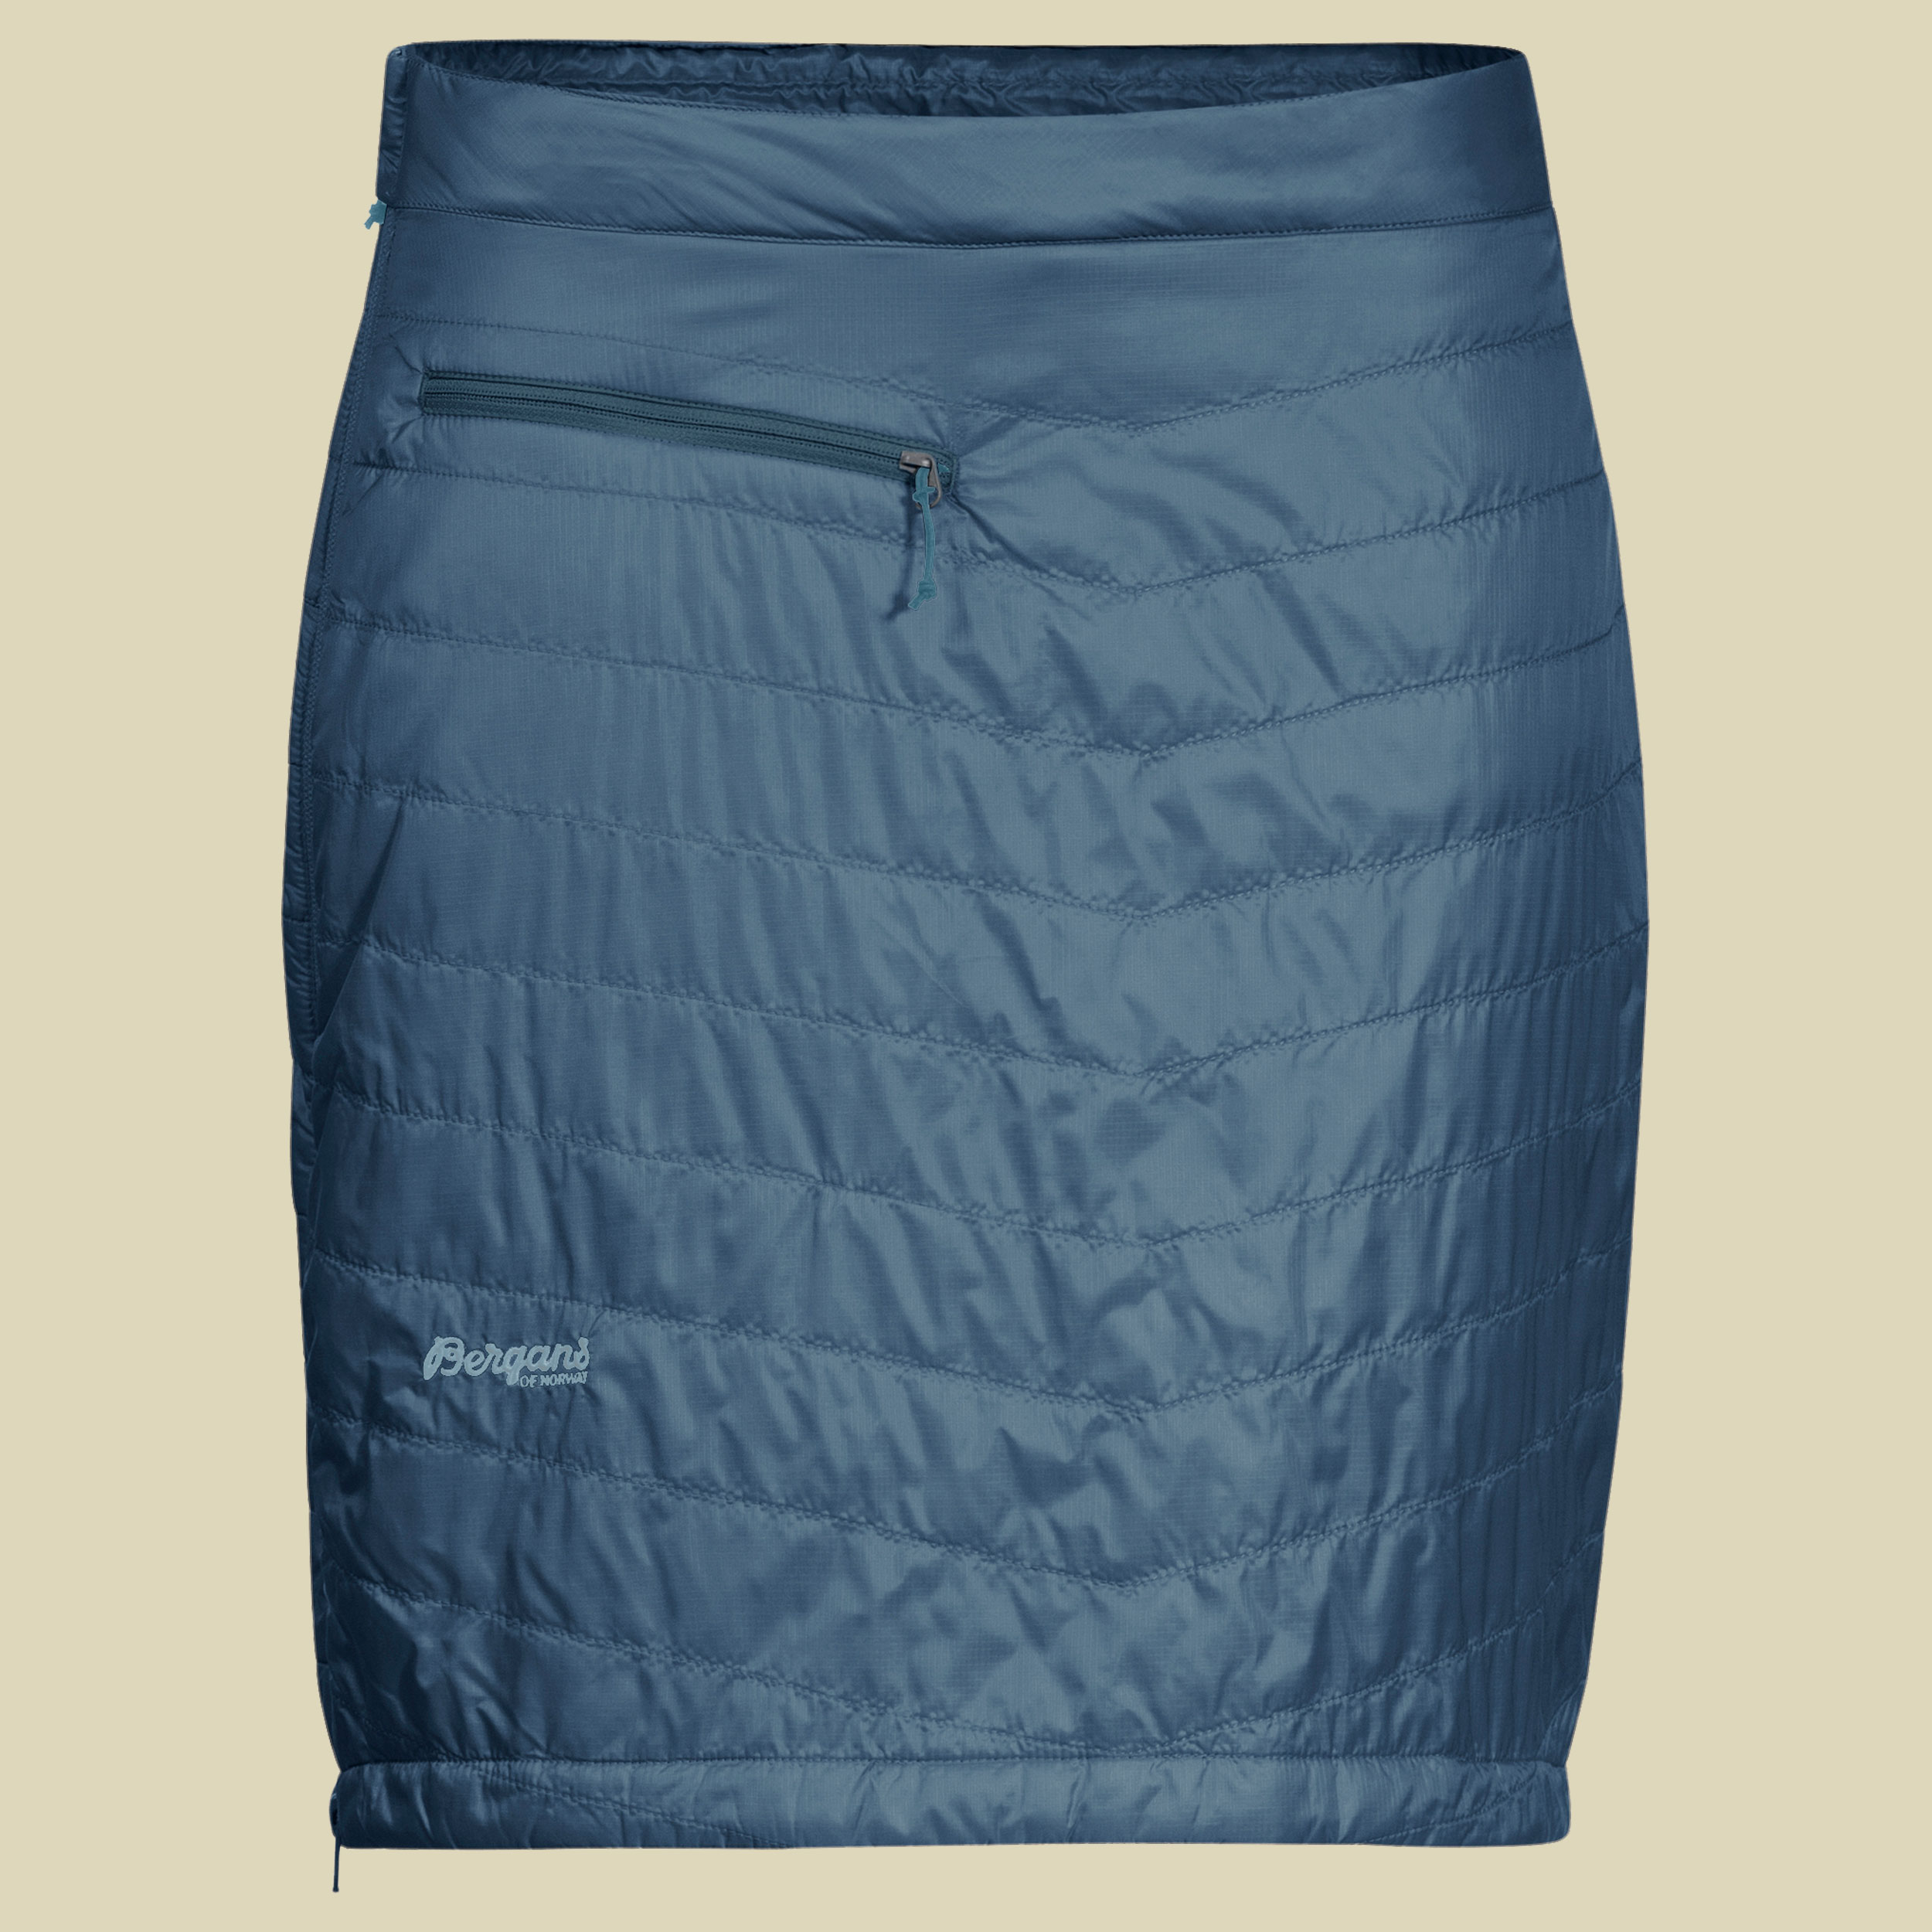 Roros Insulated Skirt Größe L  Farbe orion blue